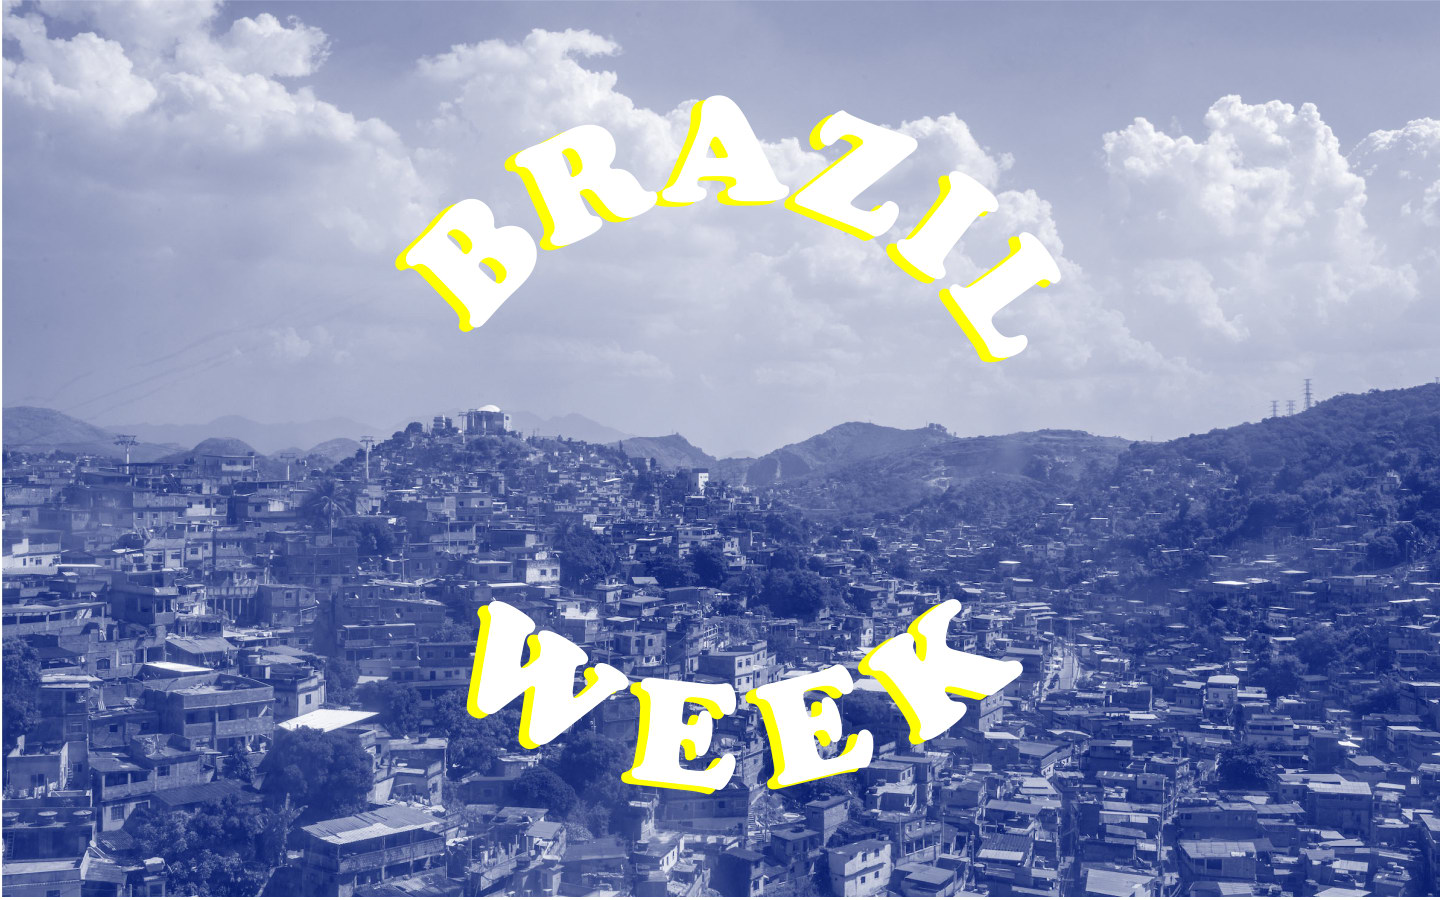 Introducing Brazil Week